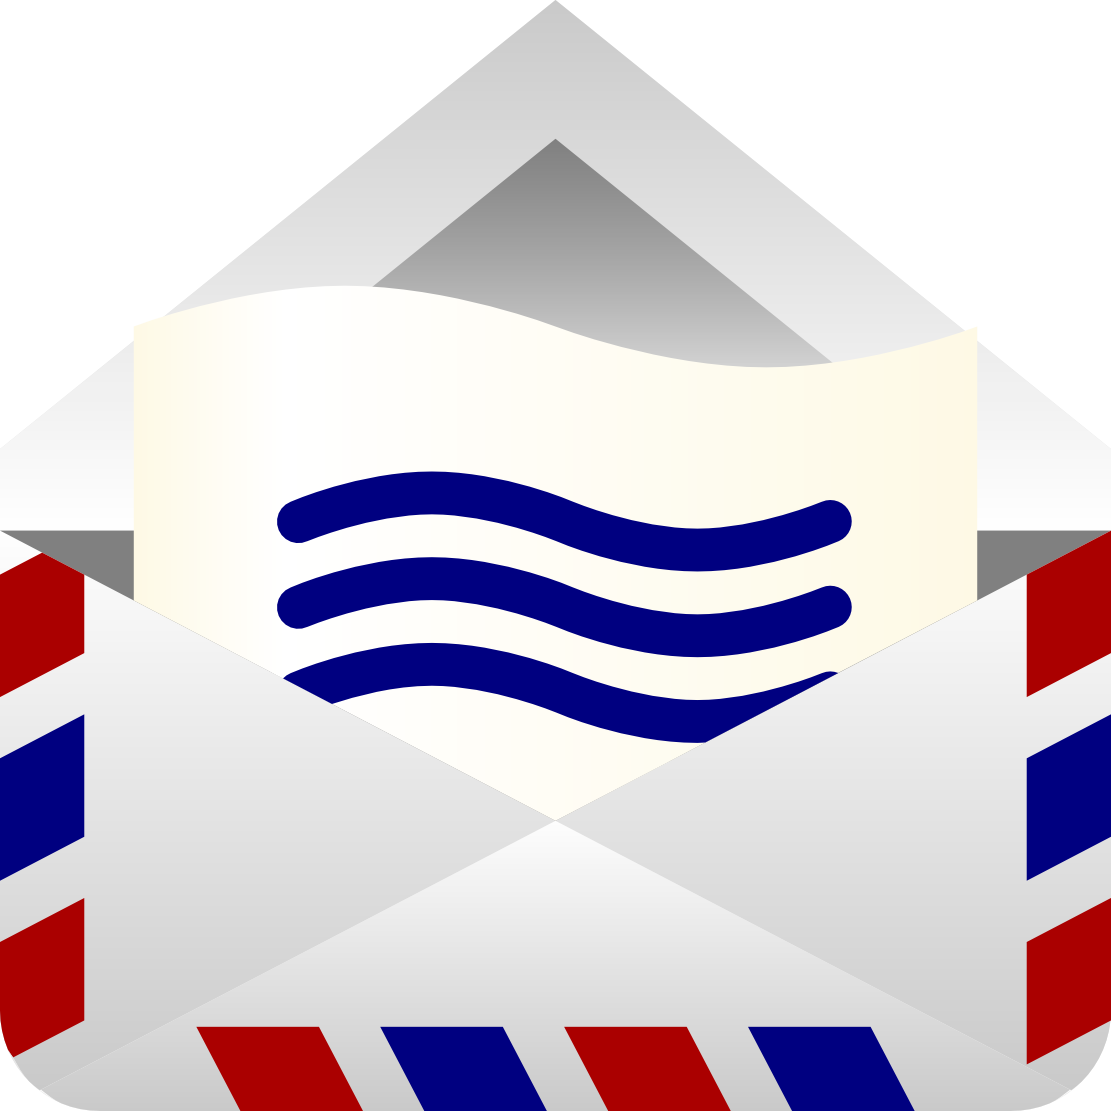 email, envelope, letter, mail